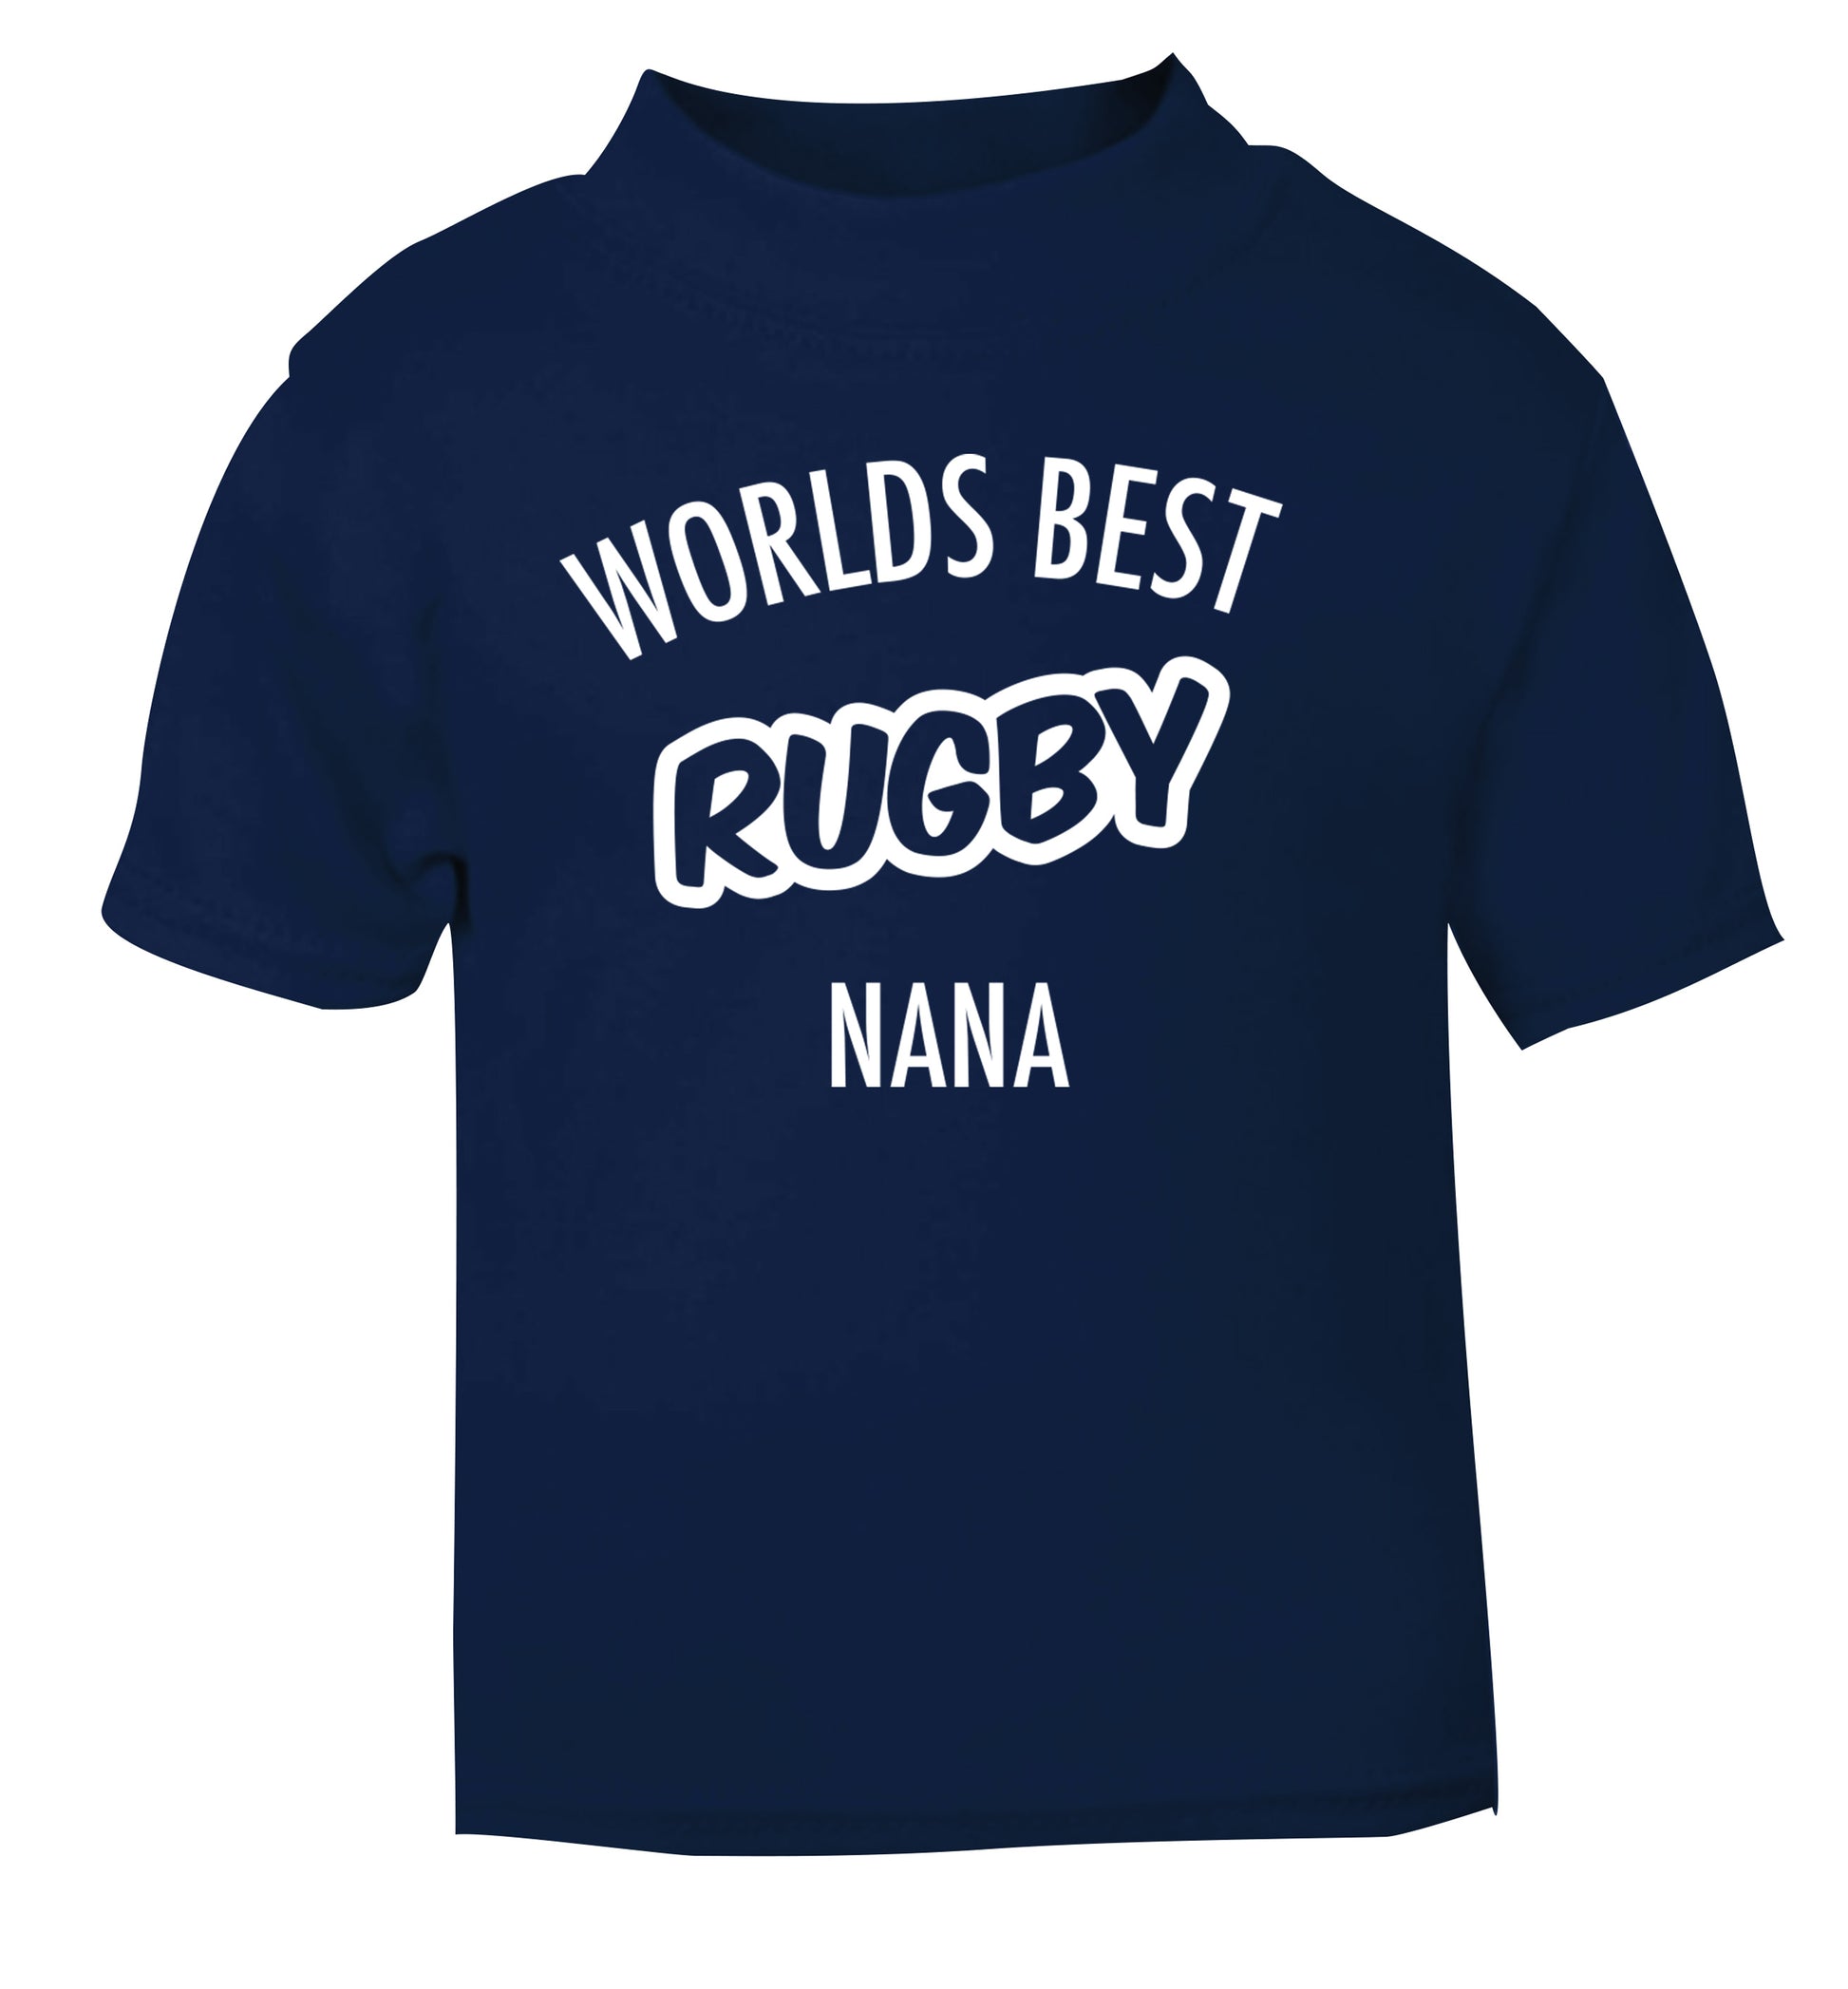 Worlds Best Rugby Grandma navy Baby Toddler Tshirt 2 Years